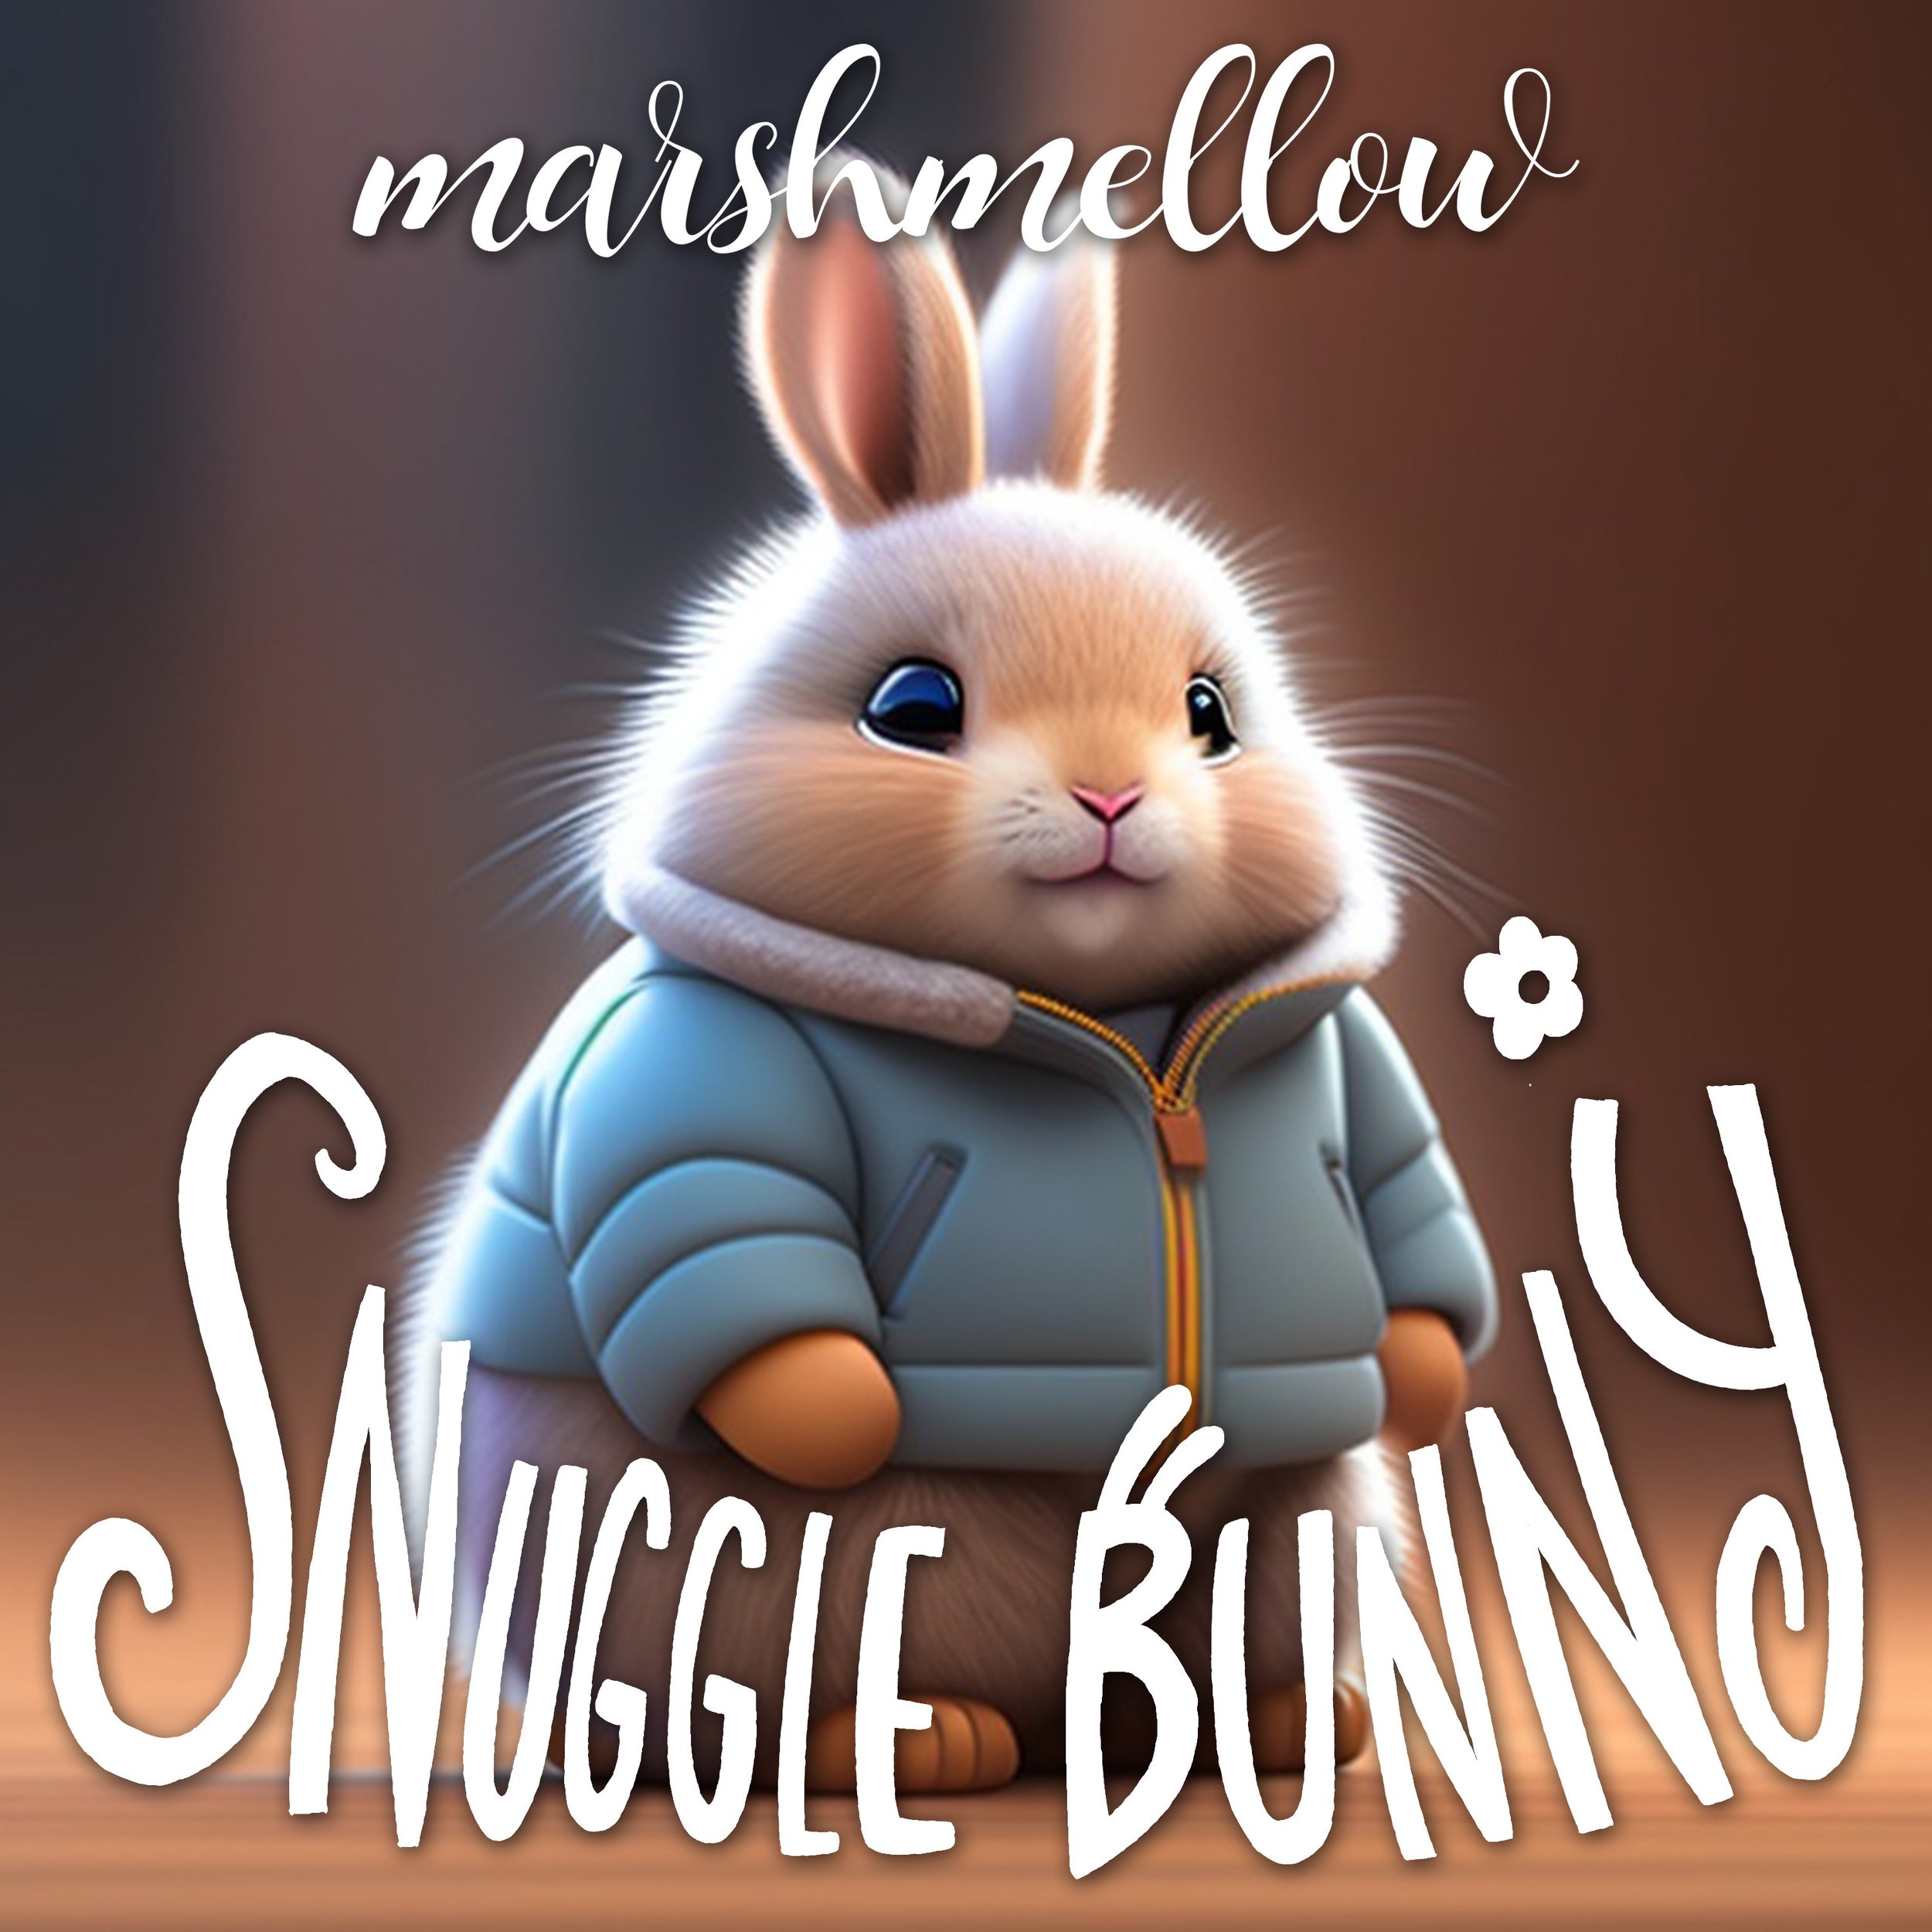 Snuggle Bunny - Marshmellow.jpg